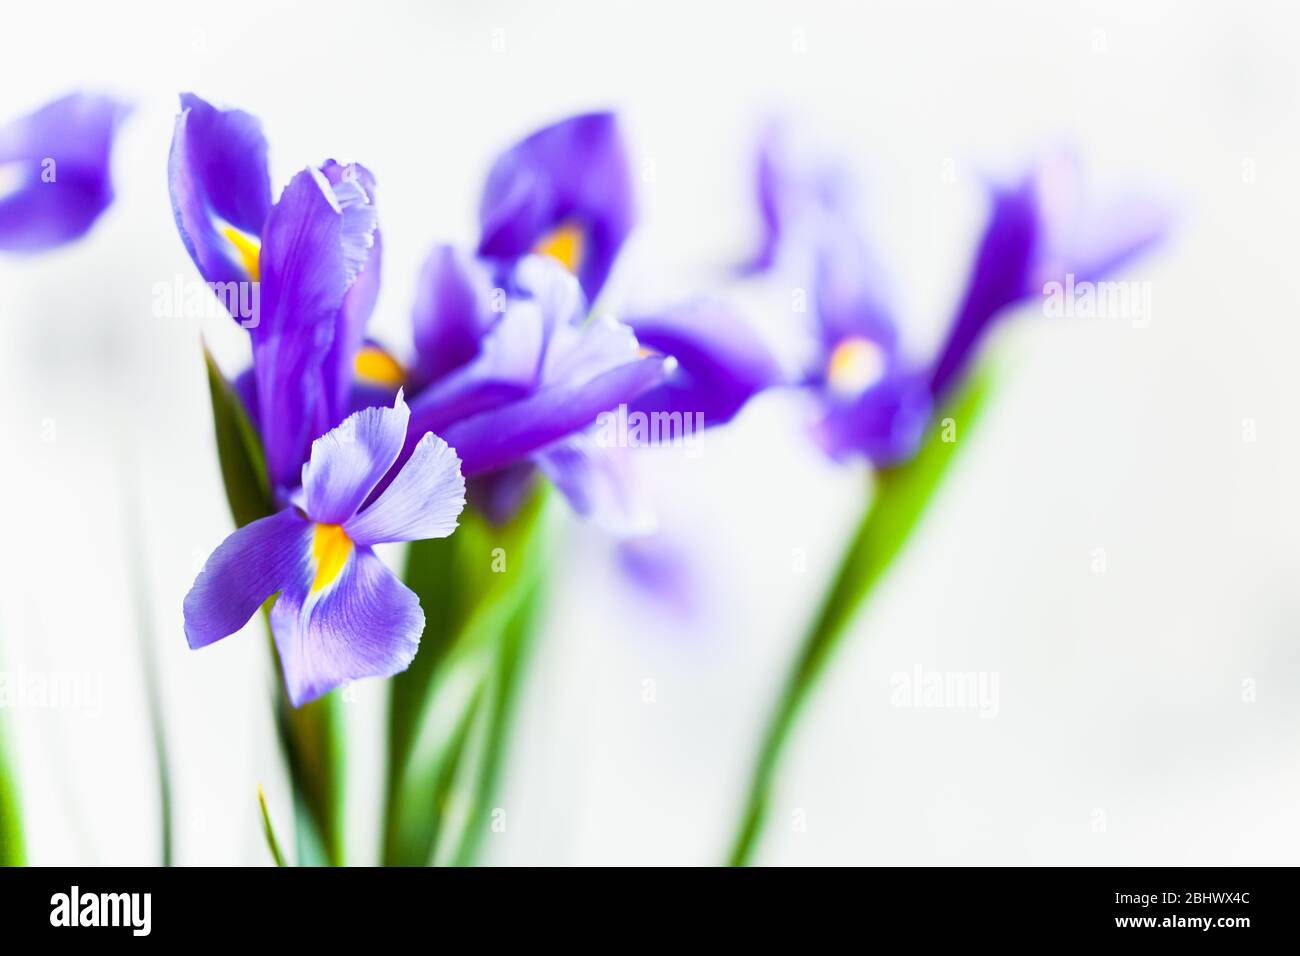 Japanese iris, flowers over blurred white background, macro photo with selective focus. Iris Laevigata Stock Photo